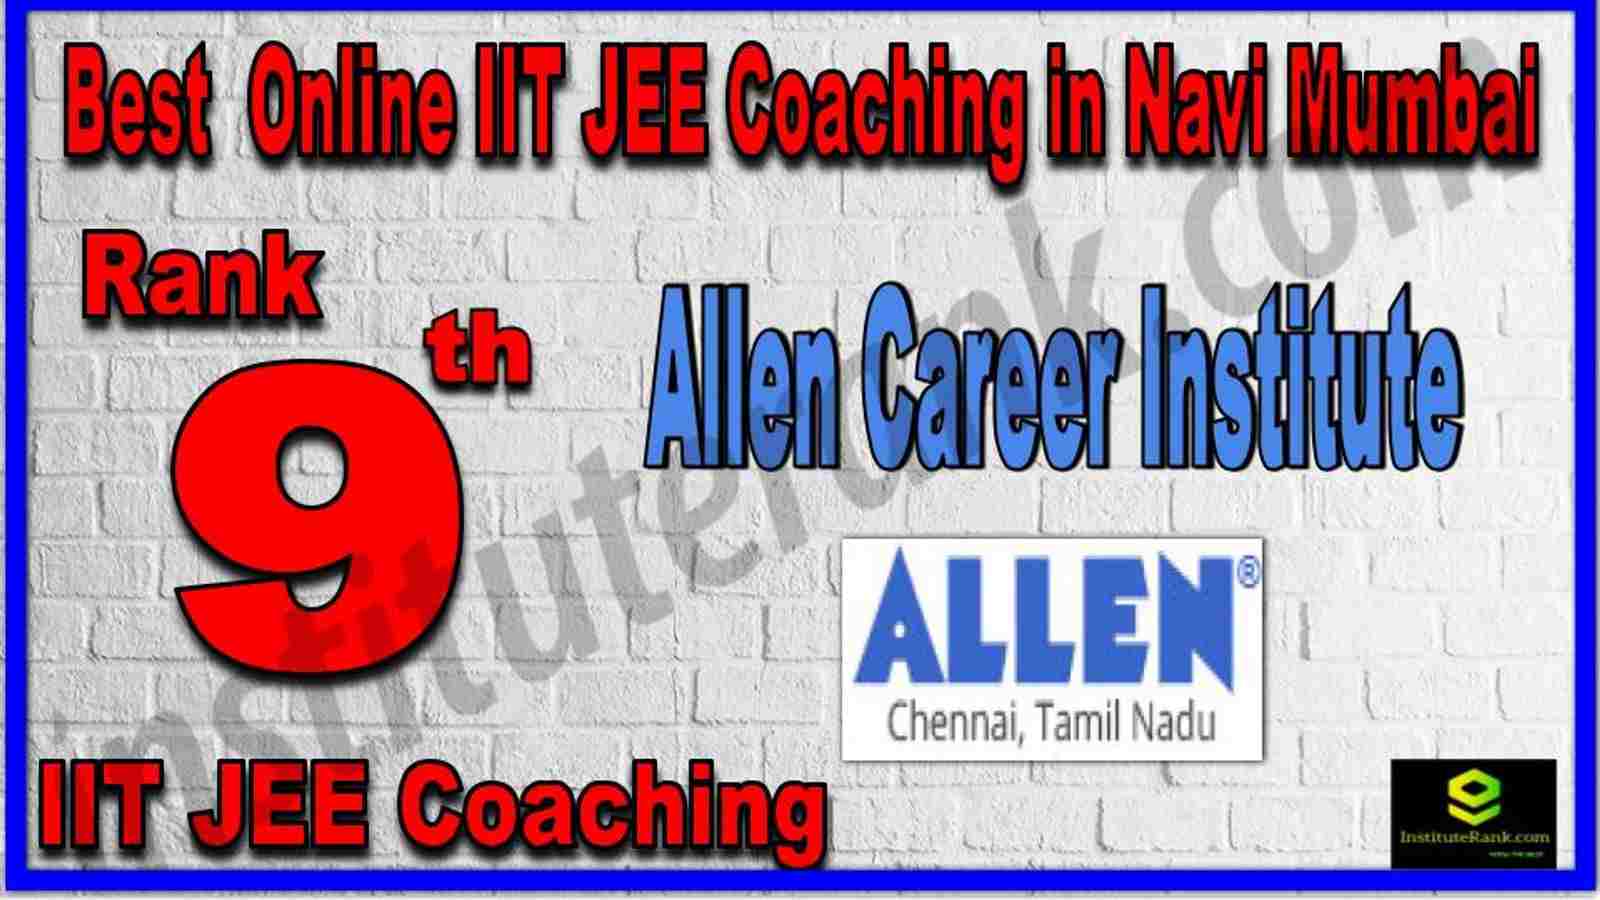 Rank 9th Best Online IIT JEE Coaching in Navi Mumbai